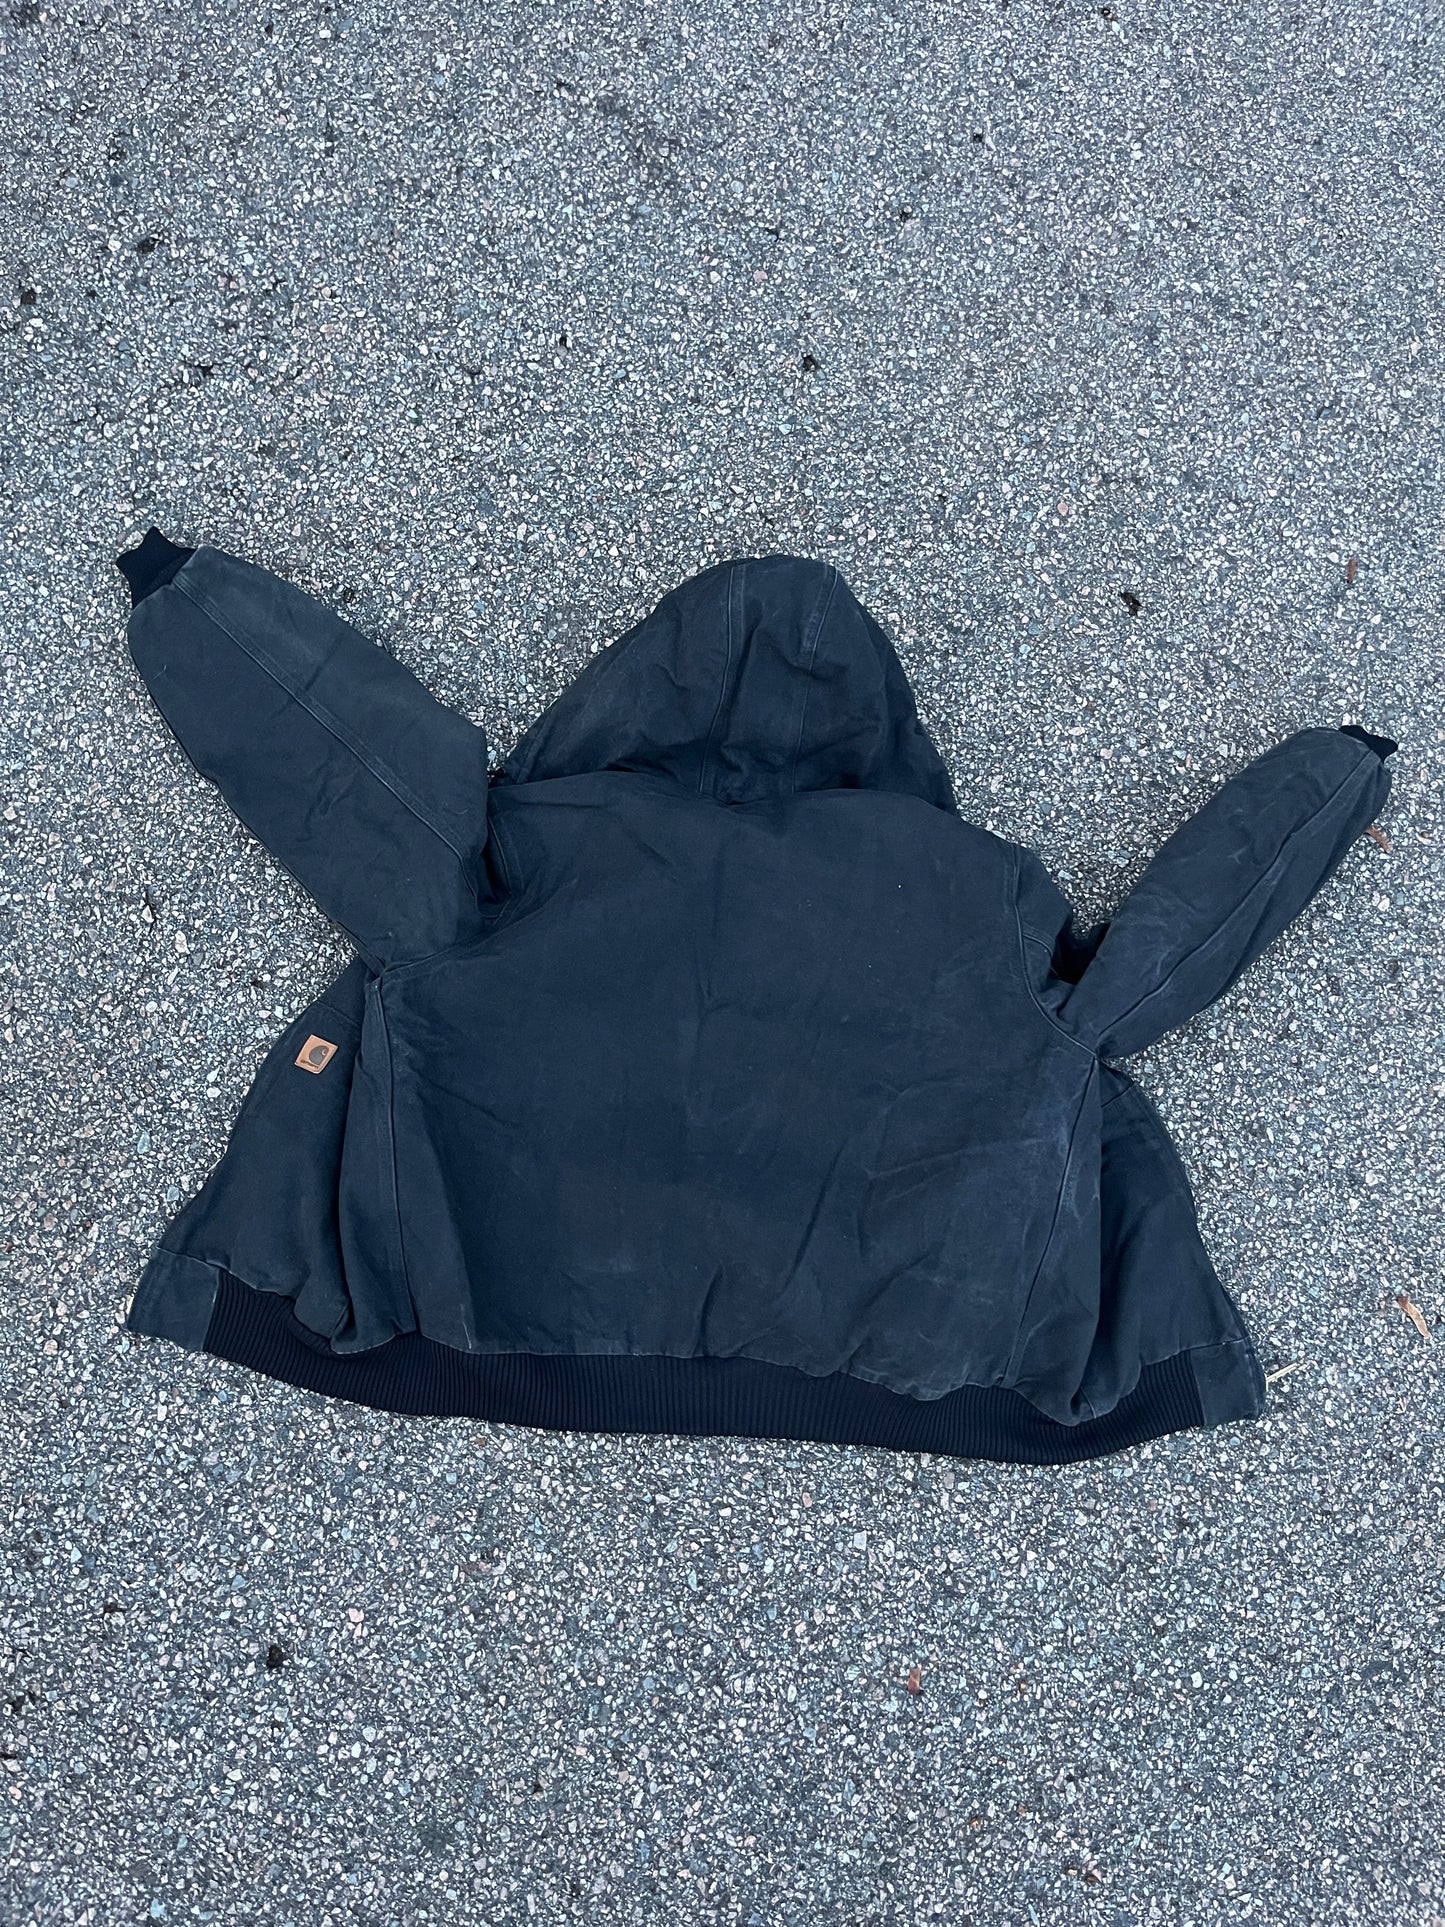 Faded Black Carhartt Active Jacket - Large